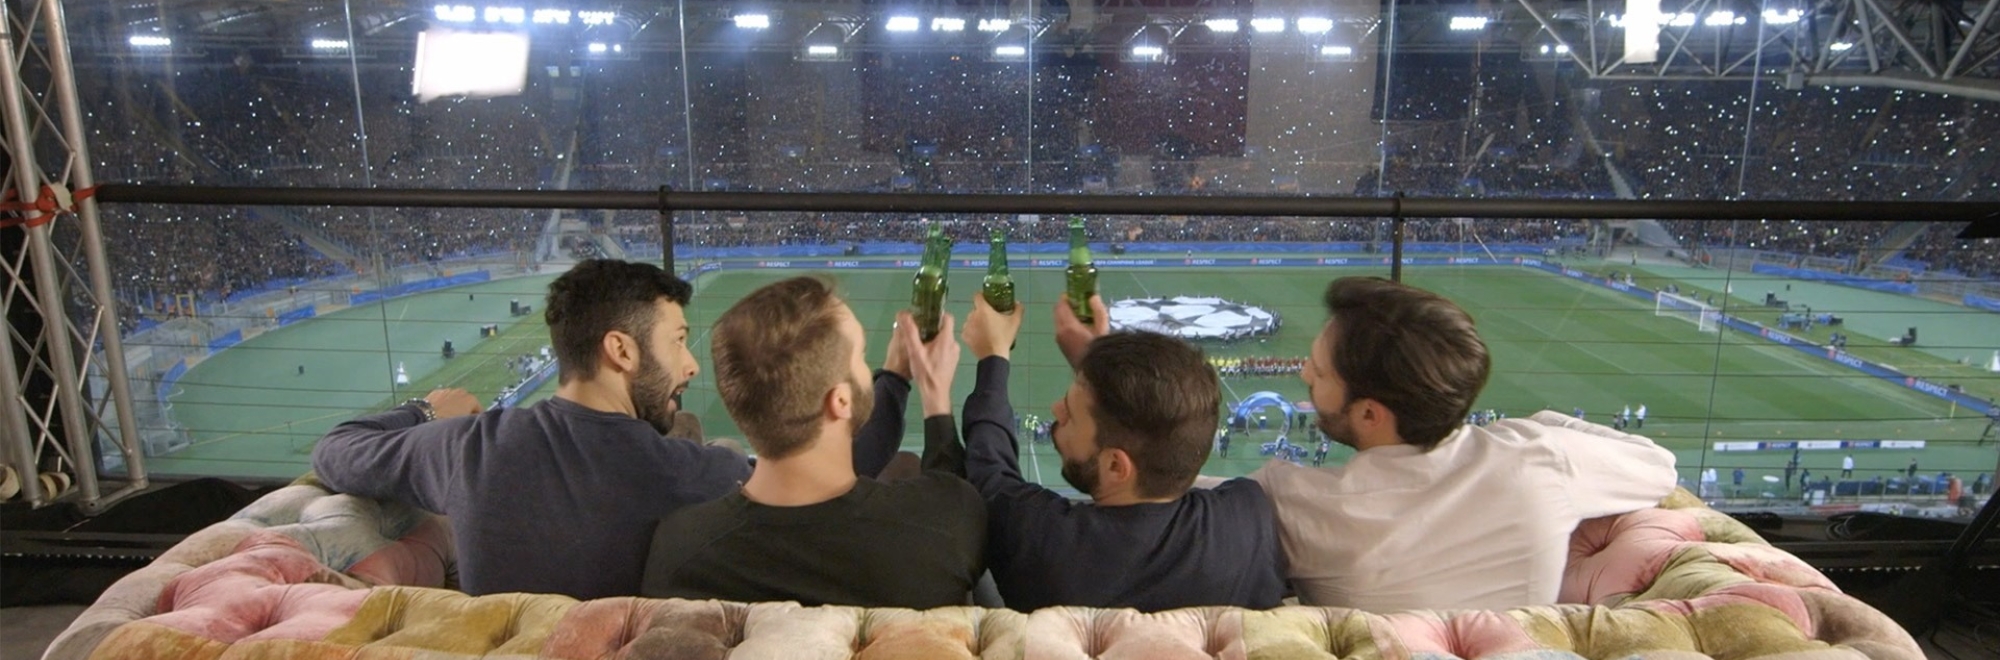 ICYMI: Heineken's The Dilemma, friends or football?